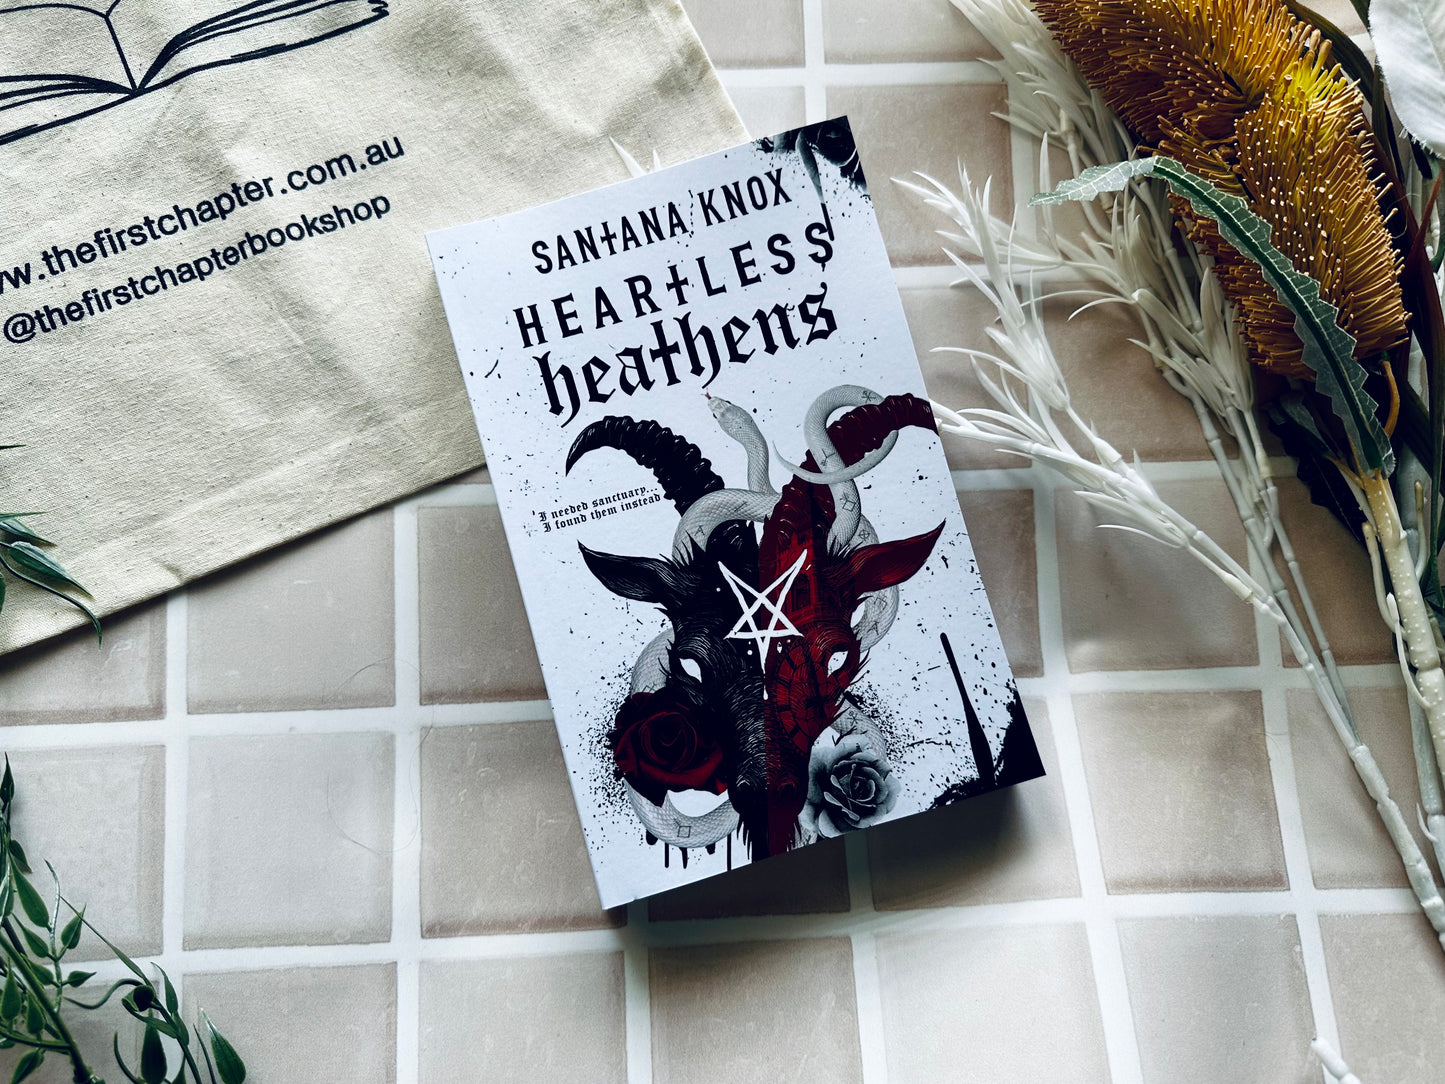 Heartless Heathens by Santana Knox (Paperback OR Hardcover)